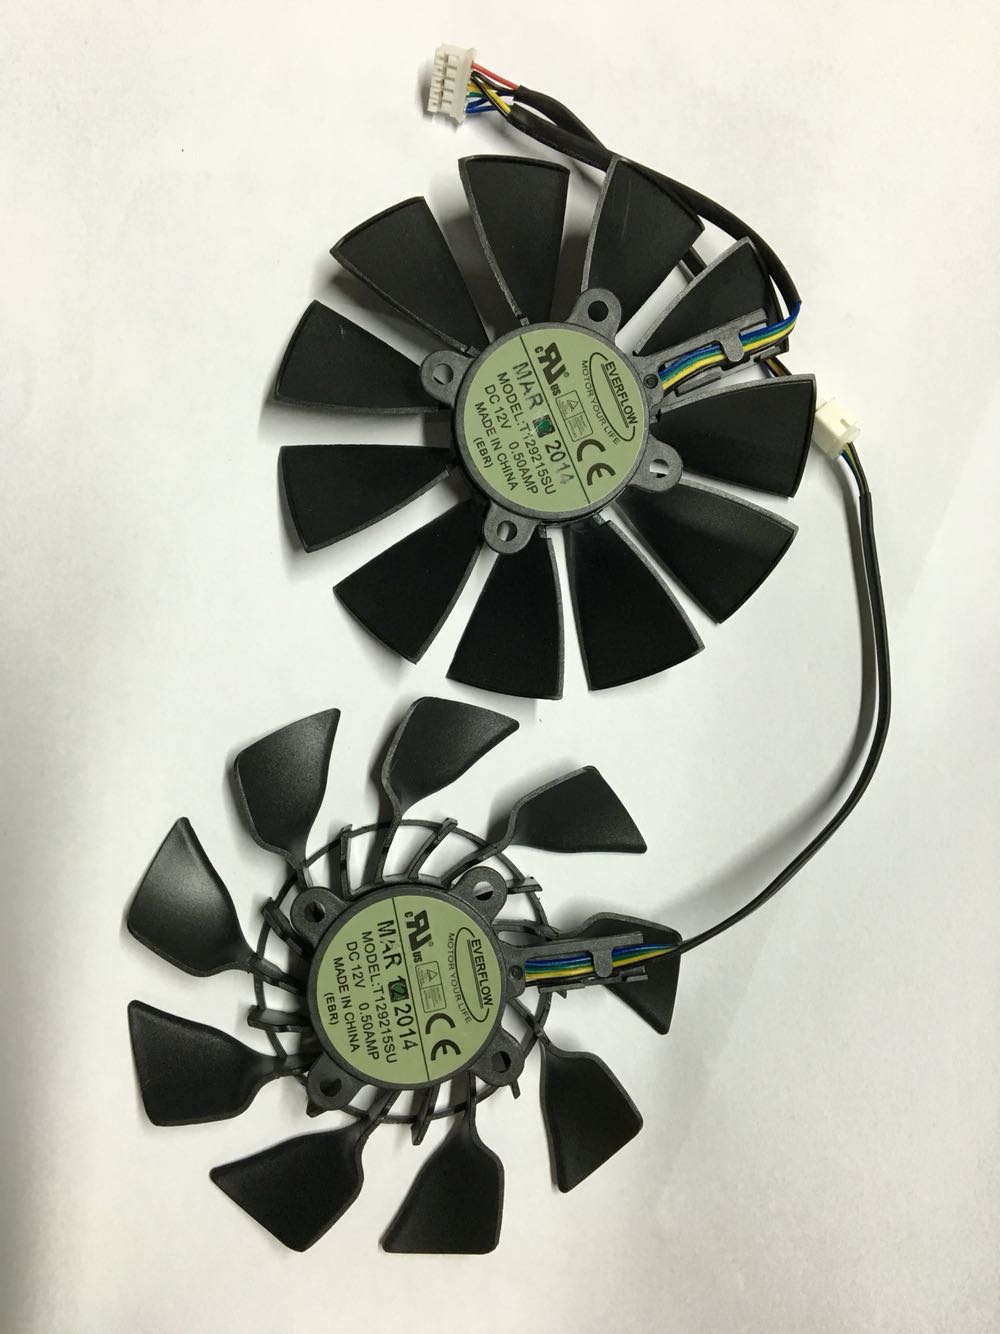 Set of 2 New ASUS GTX780 GTX780TI R9 280 280X 290 290X T129215SU DC12V 95mm 28mm 5Pin Video GPU Graphics Card Cooling Fan